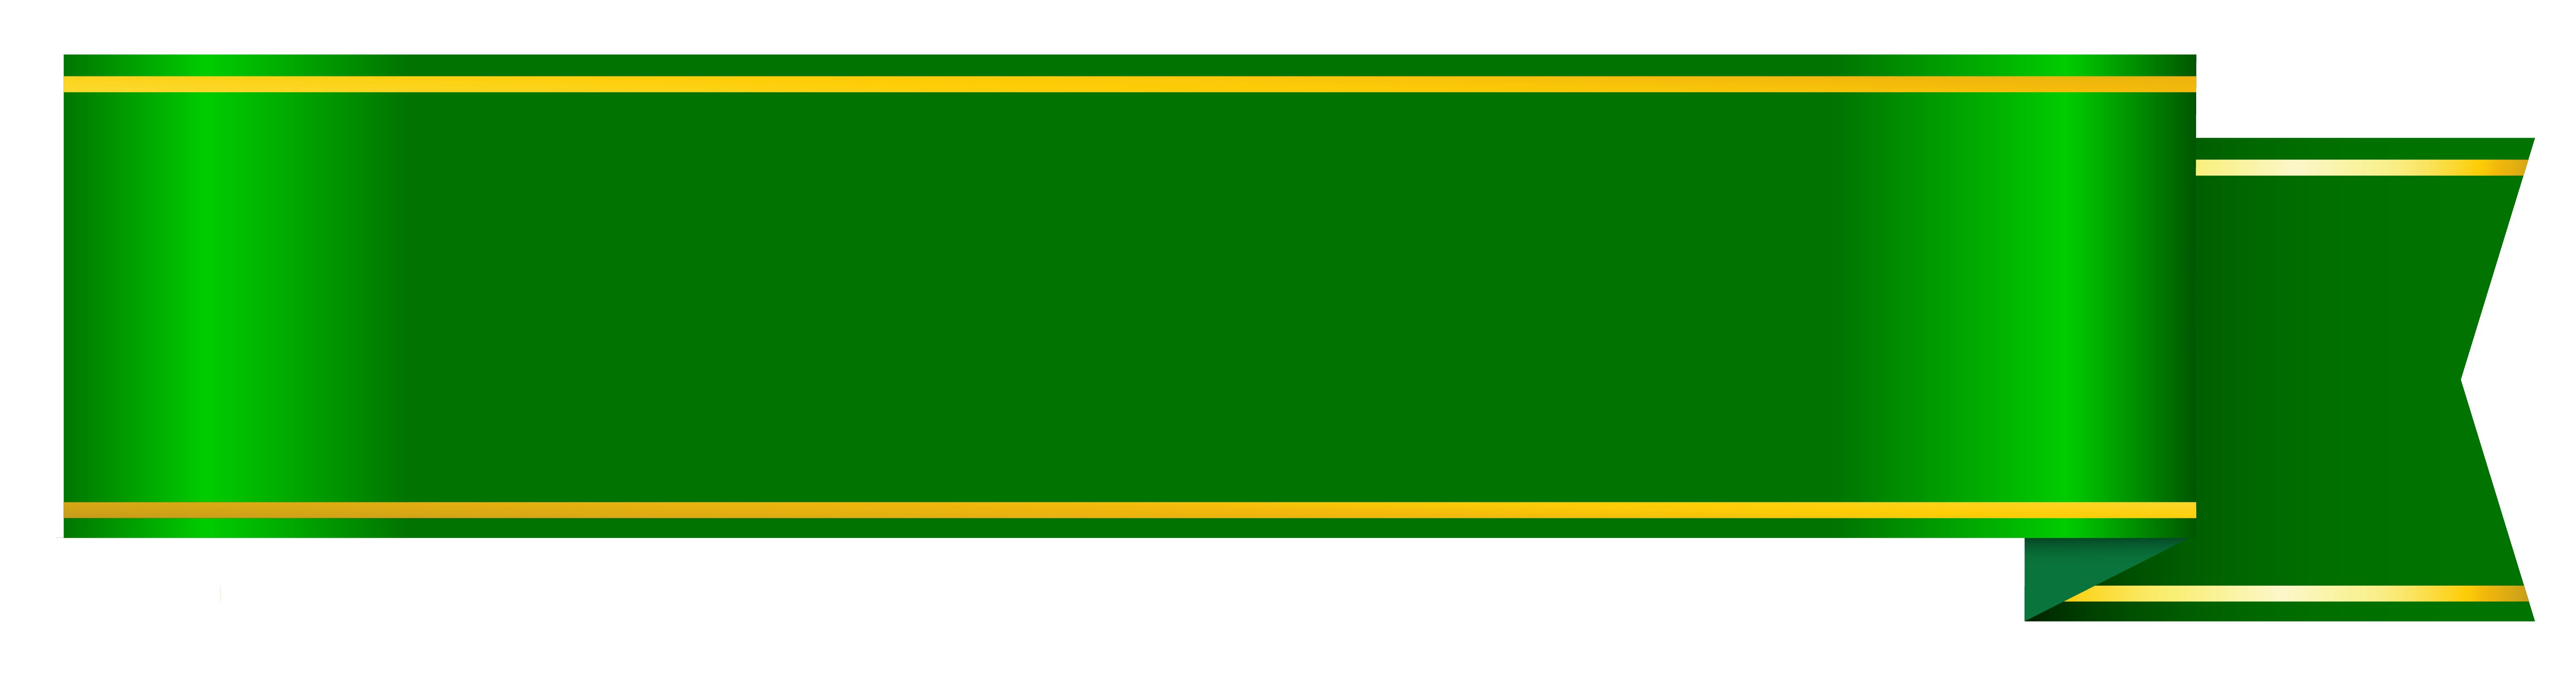 Green Ribbon Banner Clipart